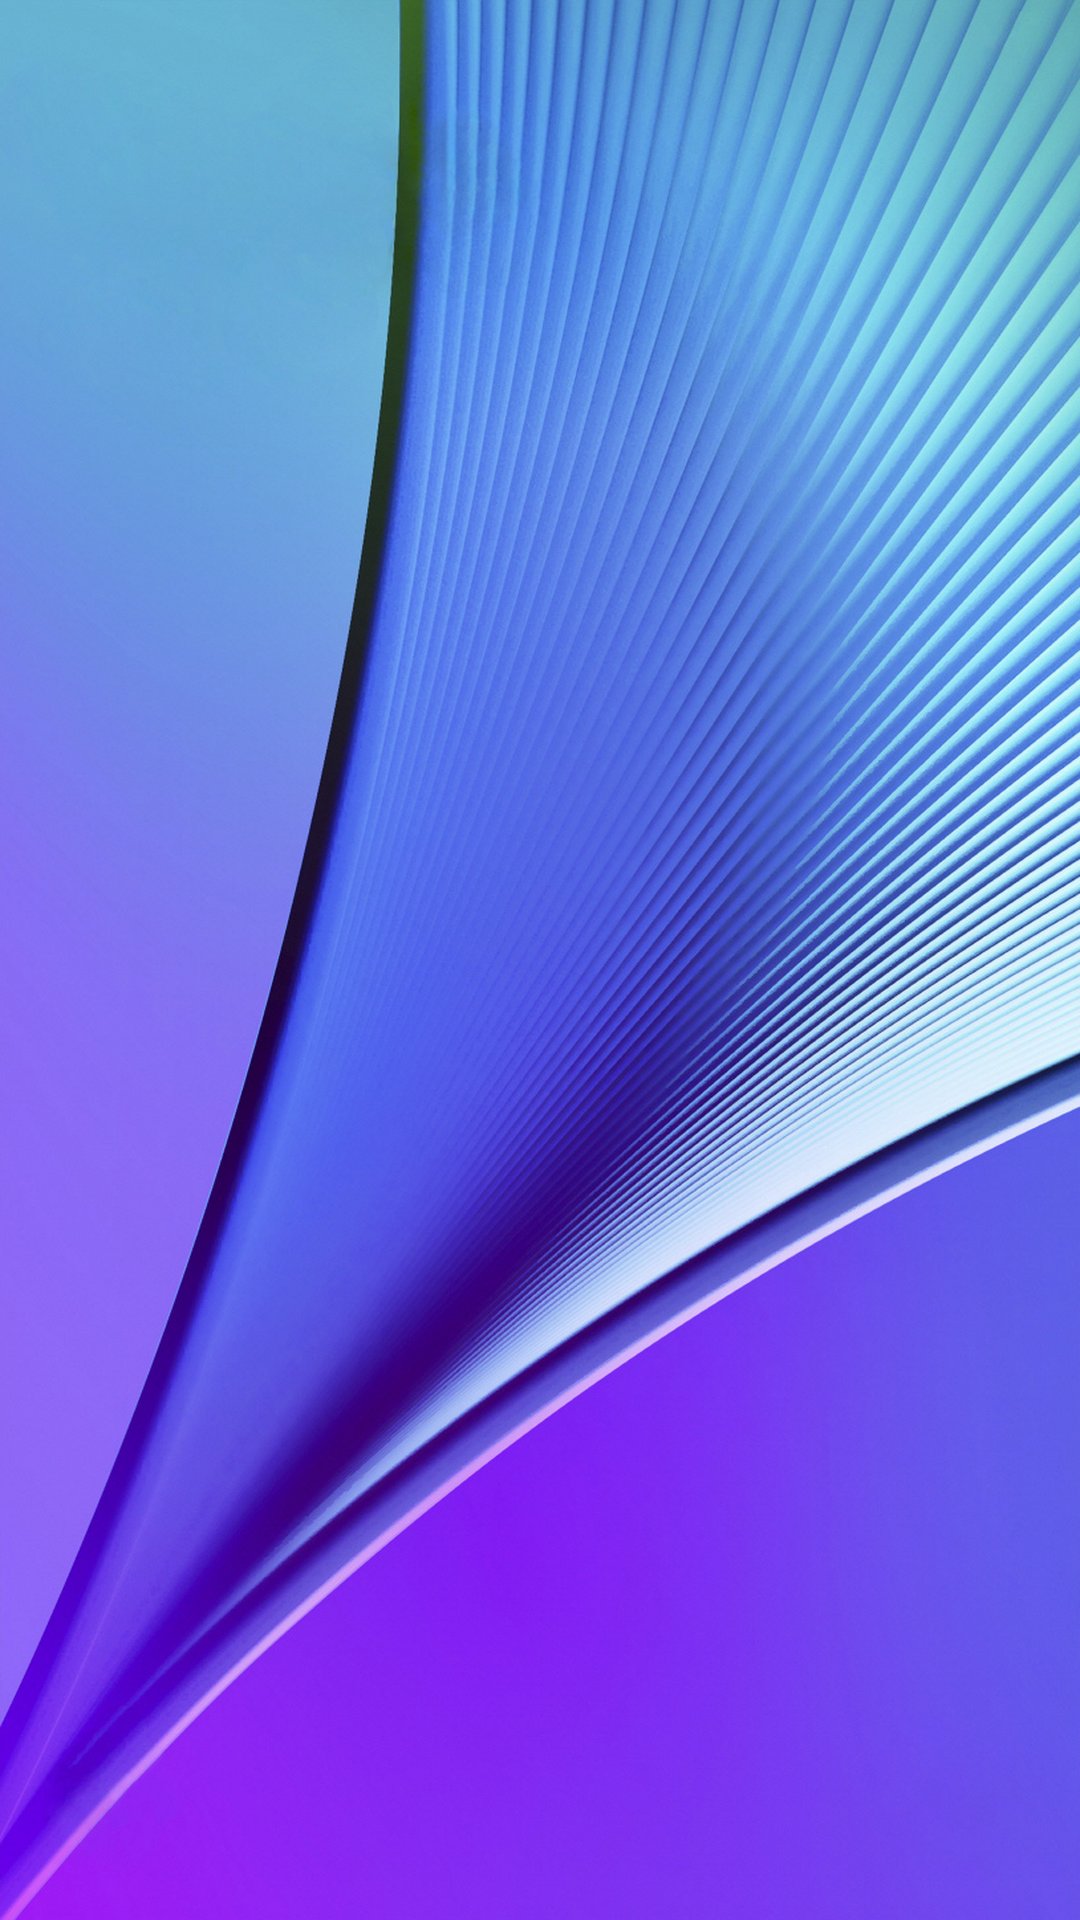 Galaxy Note S6 Edge Full HD Stock Wallpaper